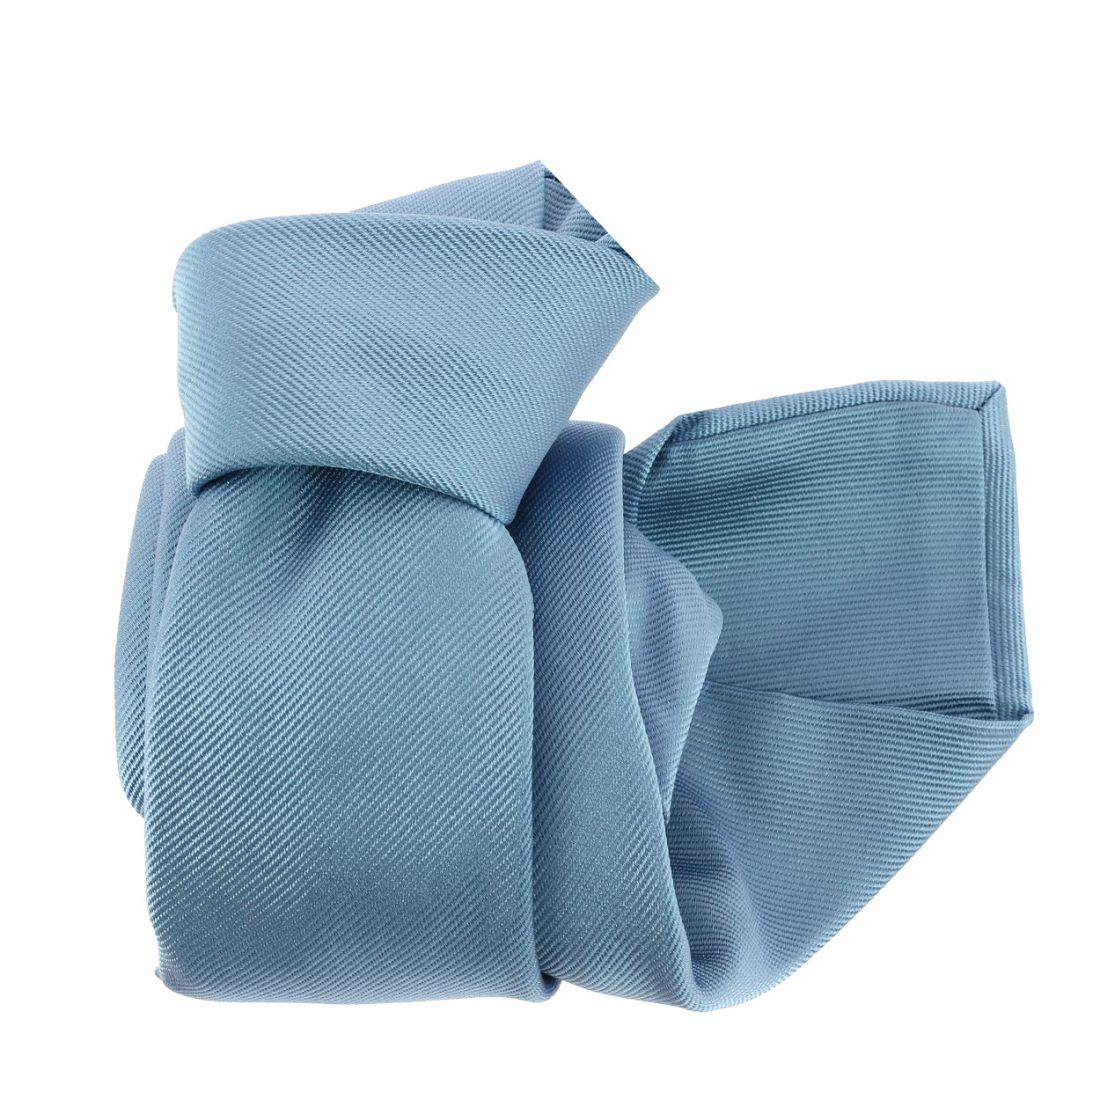 Cravate Luxe faite à la main, Tevere Bleu Tony & Paul